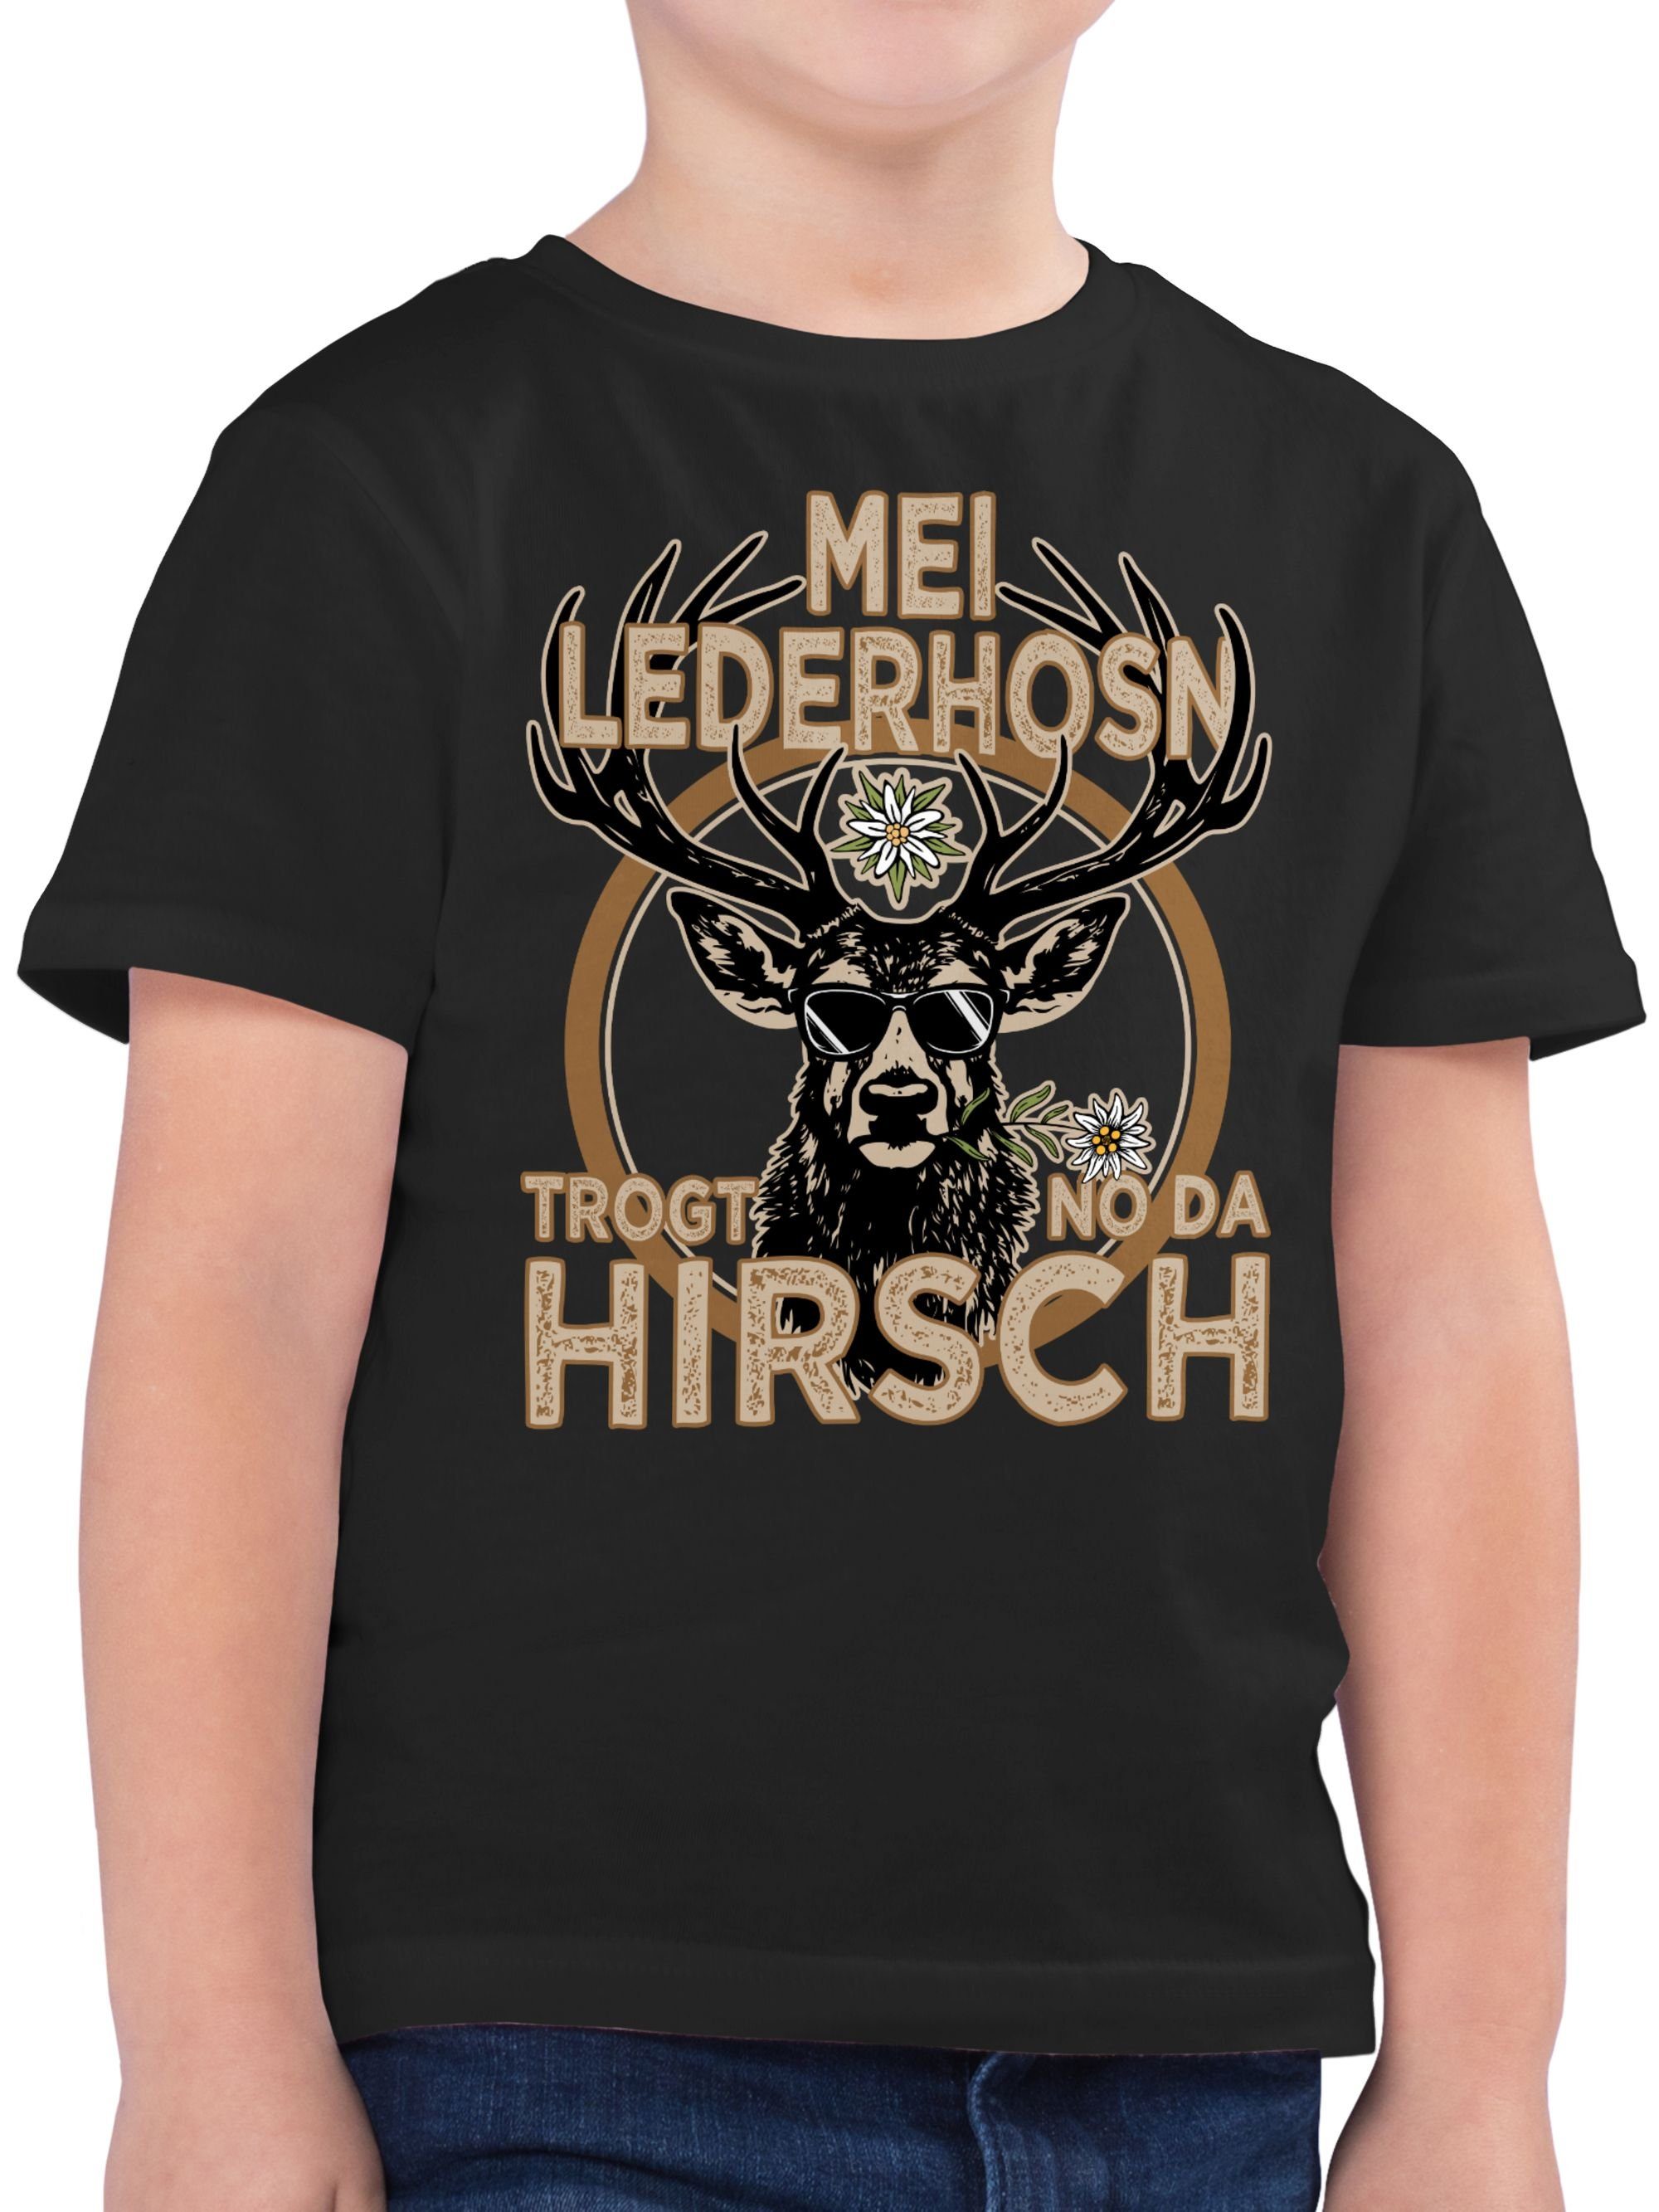 Shirtracer T-Shirt Trachten Outfit Lederhose Spruch Trägt der Hirsch Mode für Oktoberfest Kinder Outfit 01 Schwarz